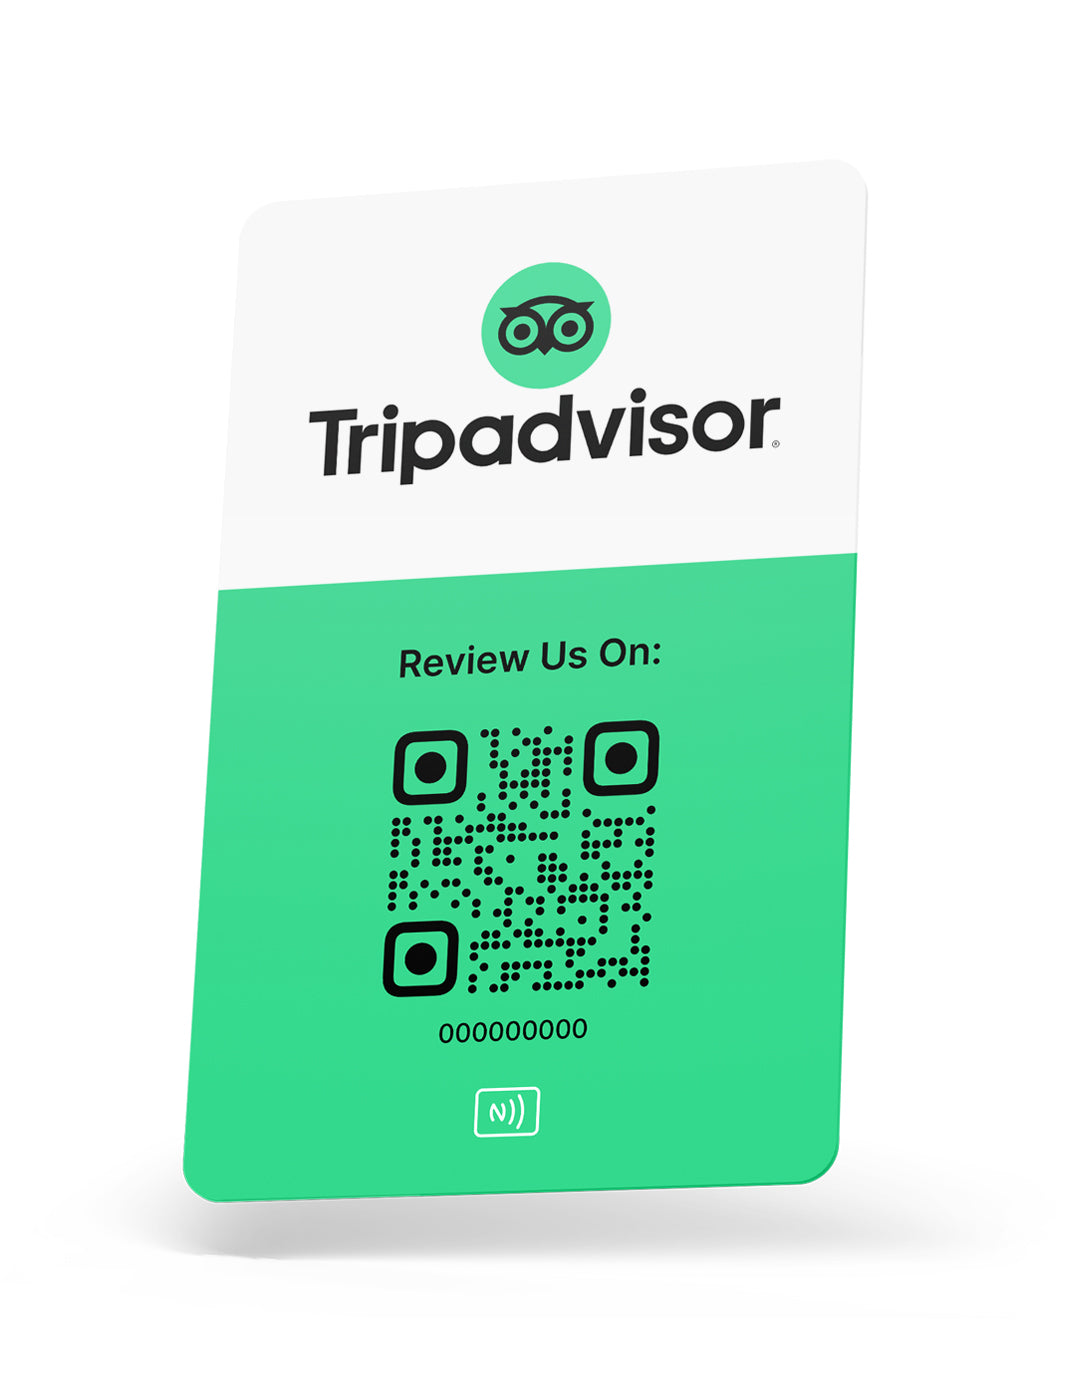 Tripadvisor Review Smart Card